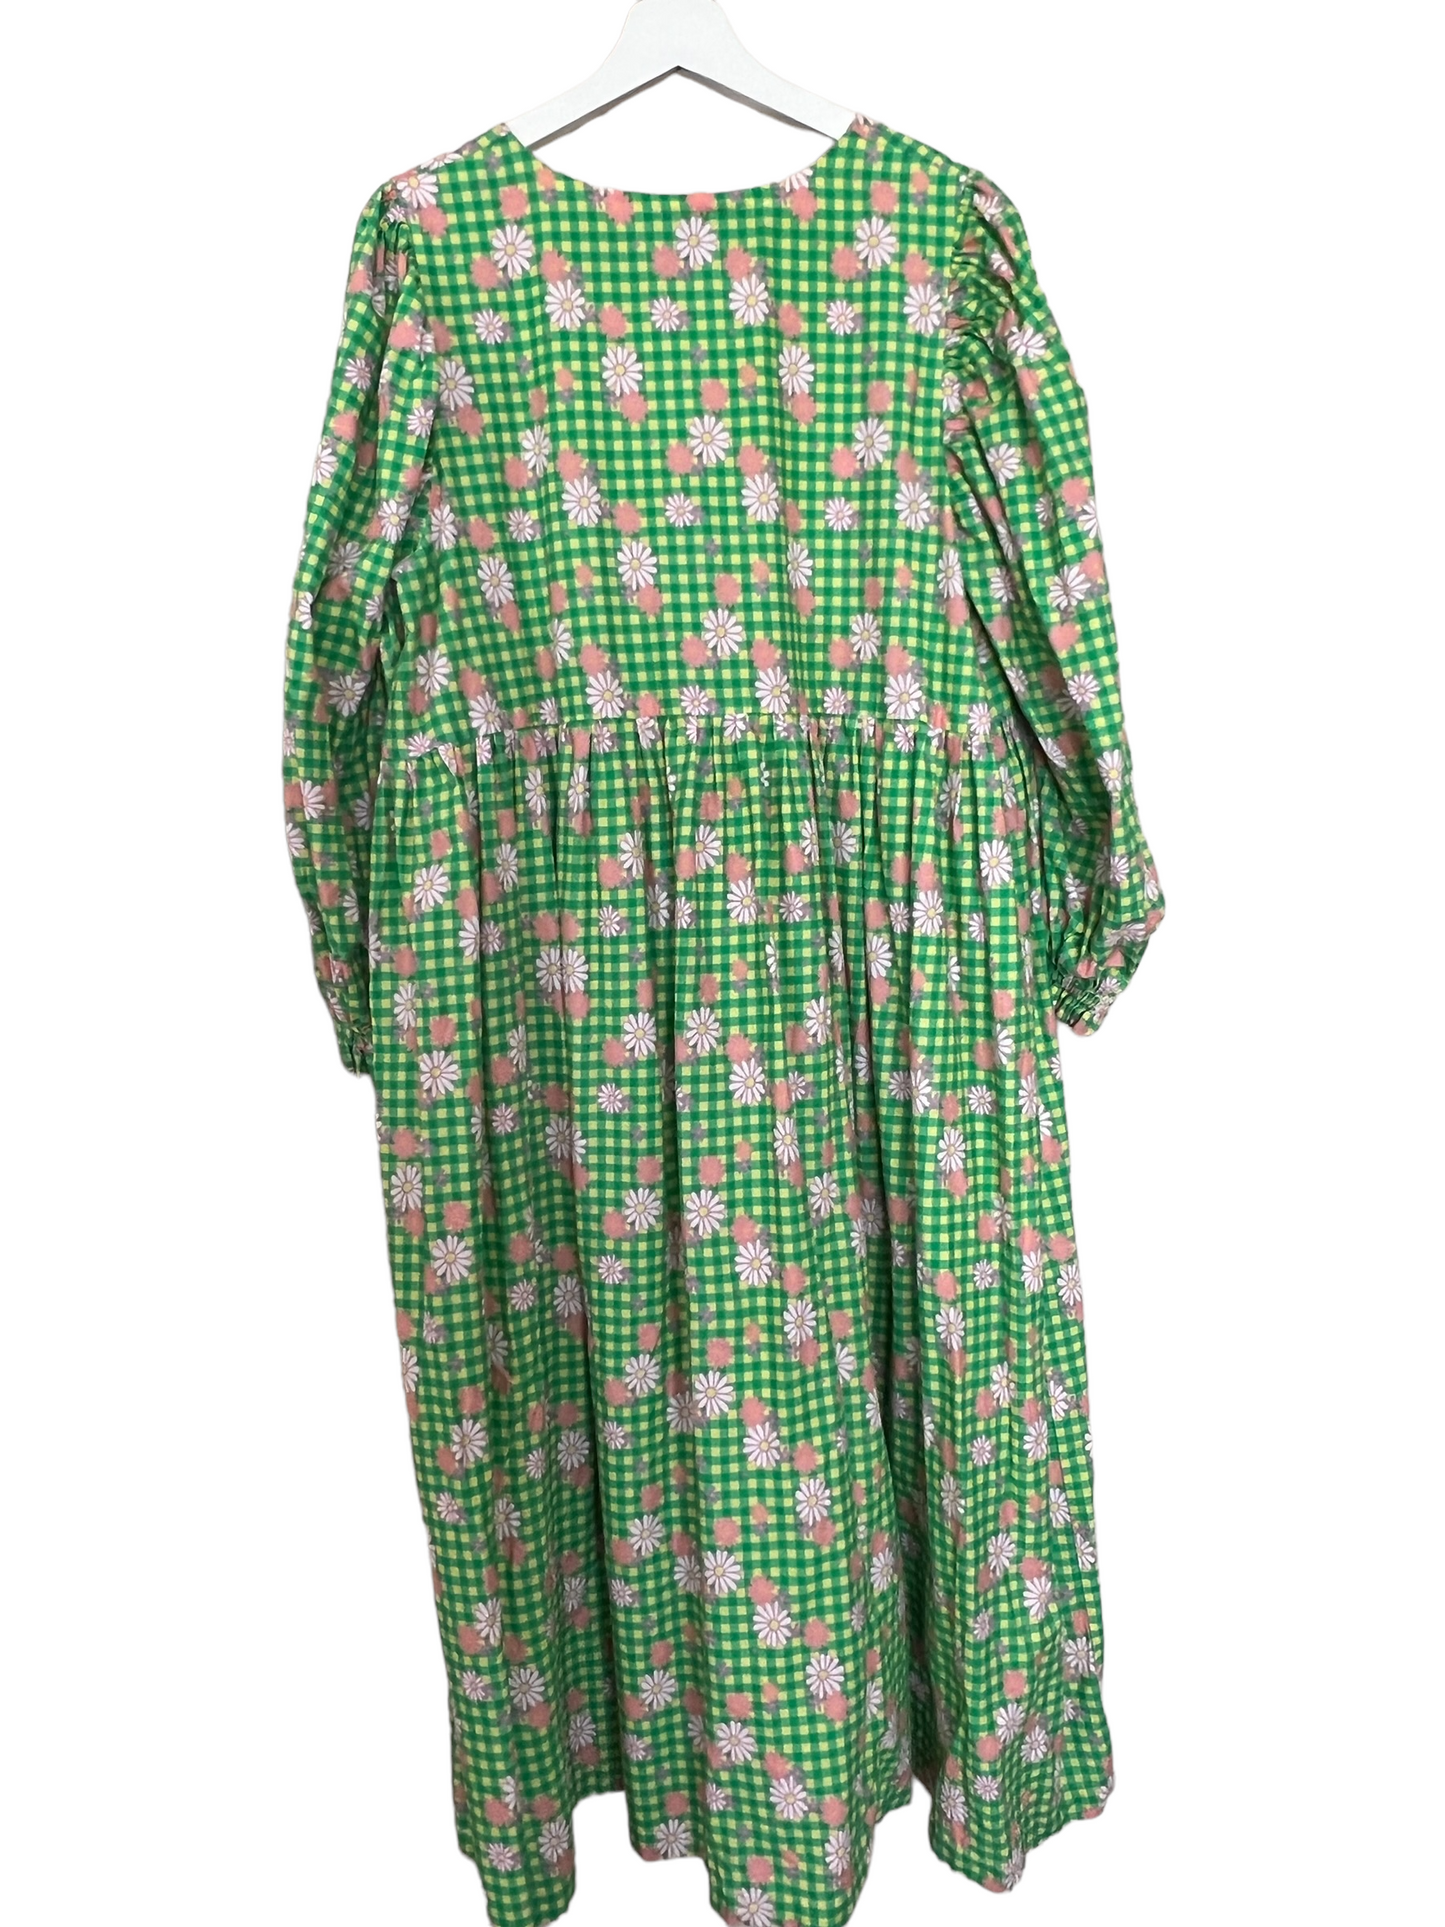 Lime Green Floral Plaid Floral Vintage Inspired Mumu Mothball Dress